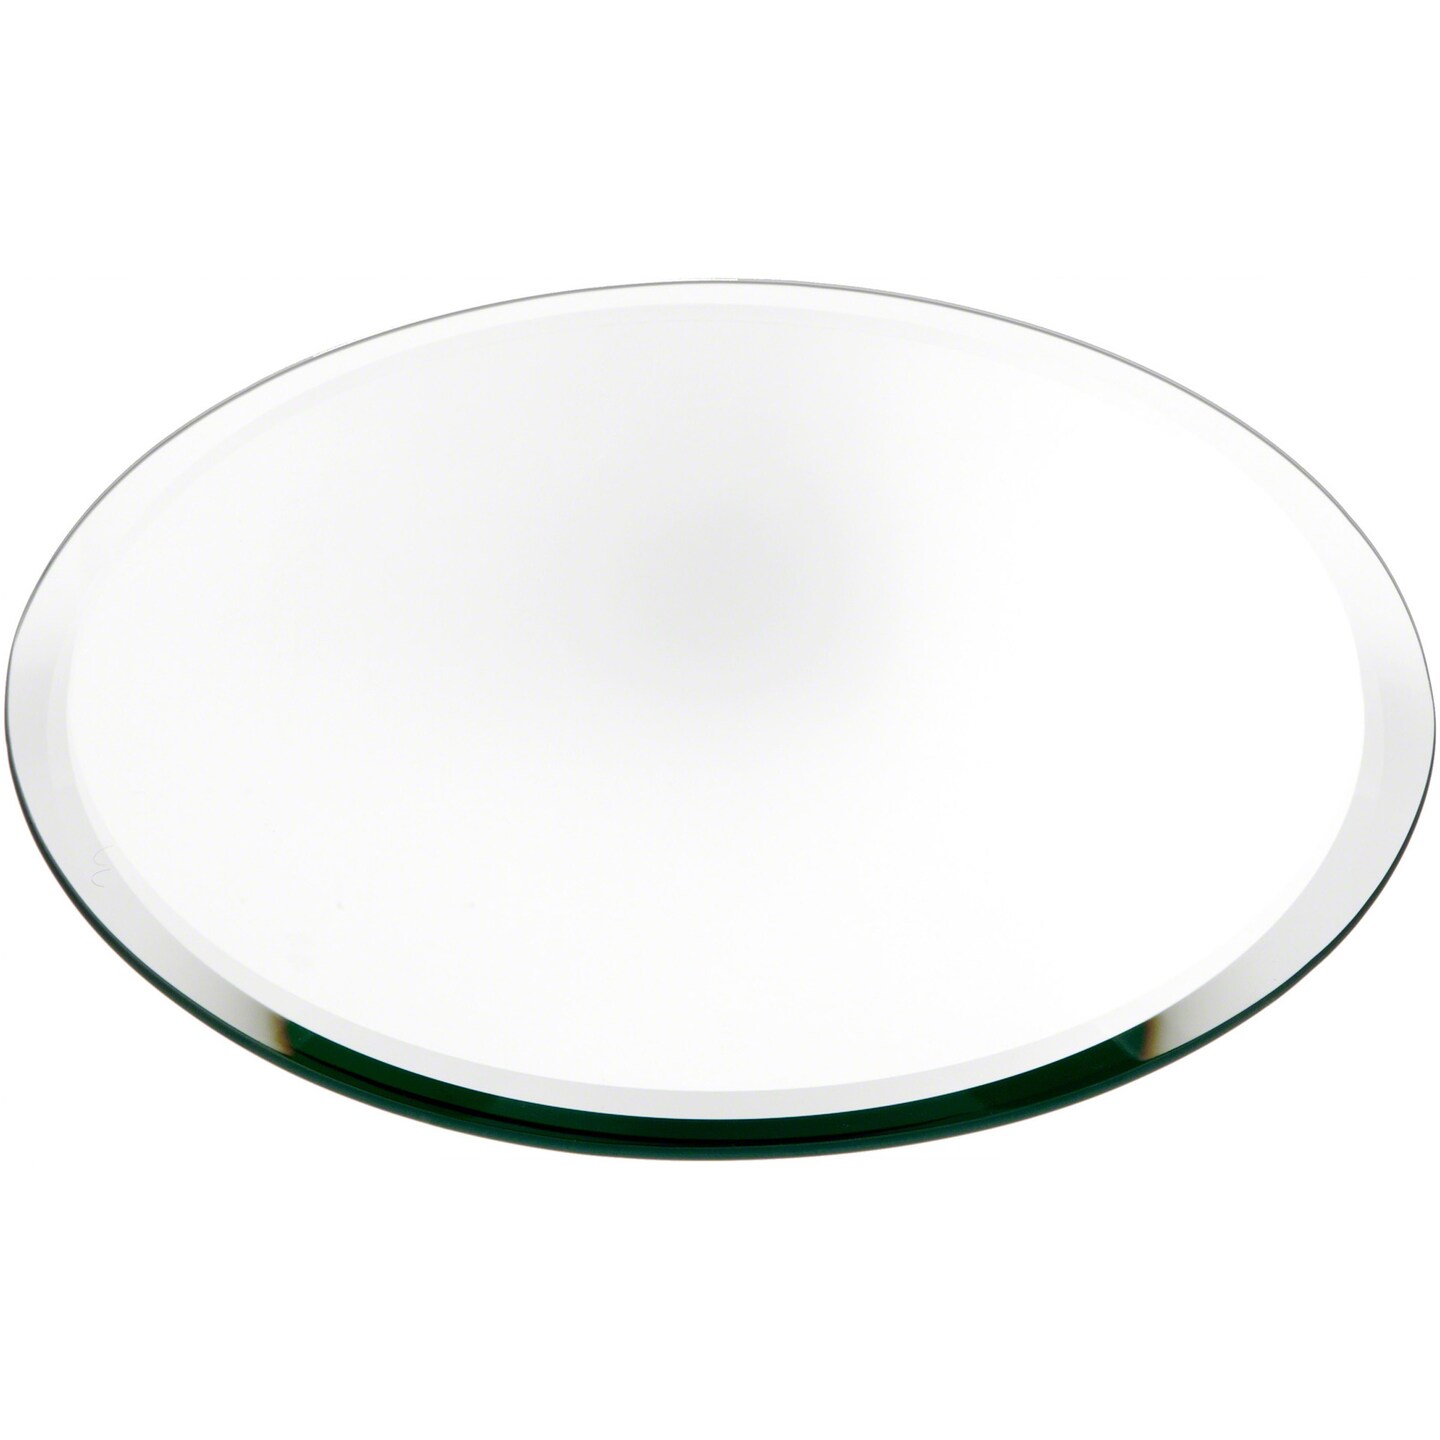 Plymor Round 5mm Beveled Glass Mirror, 10 inch x 10 inch